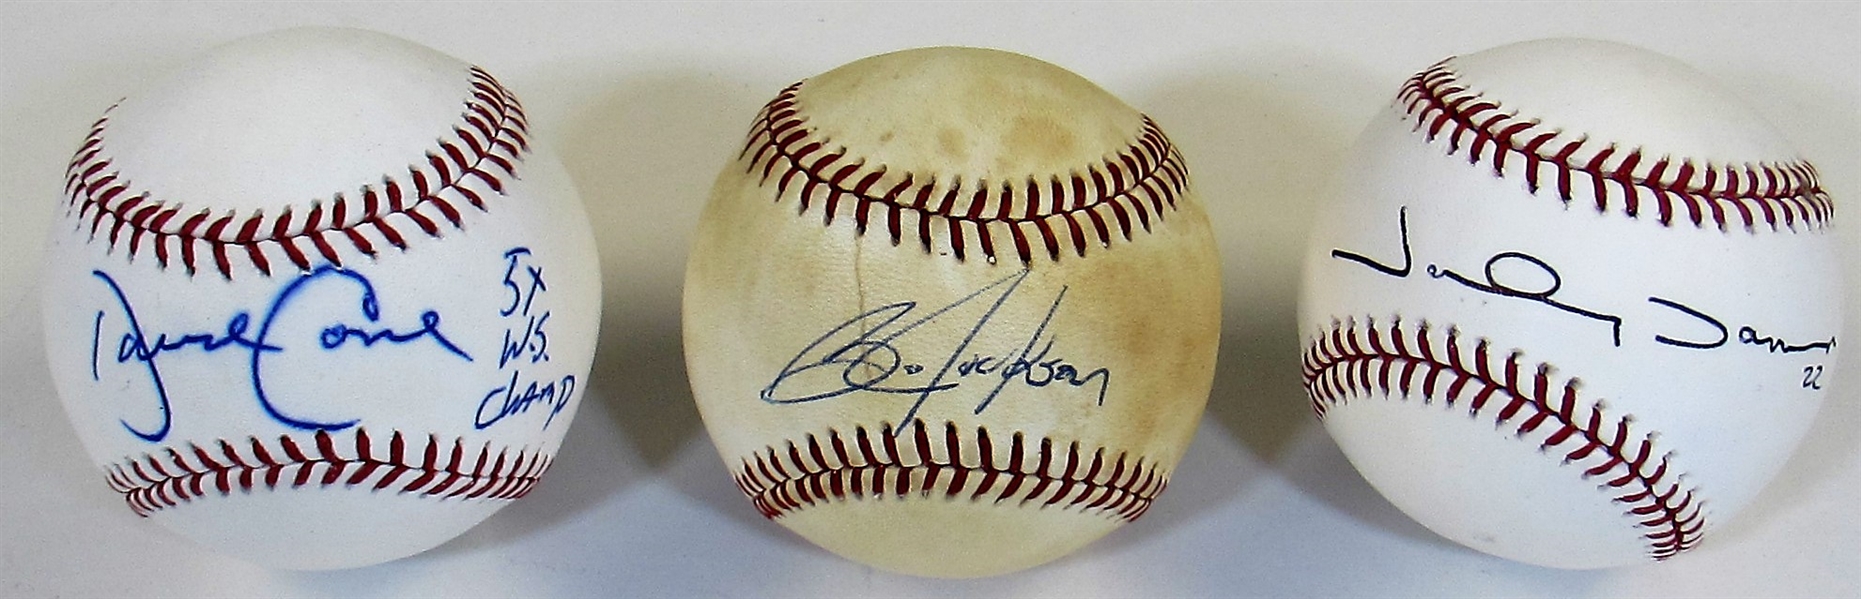 Bo Jackson-David Cone Johnny Damon Signed Baseballs